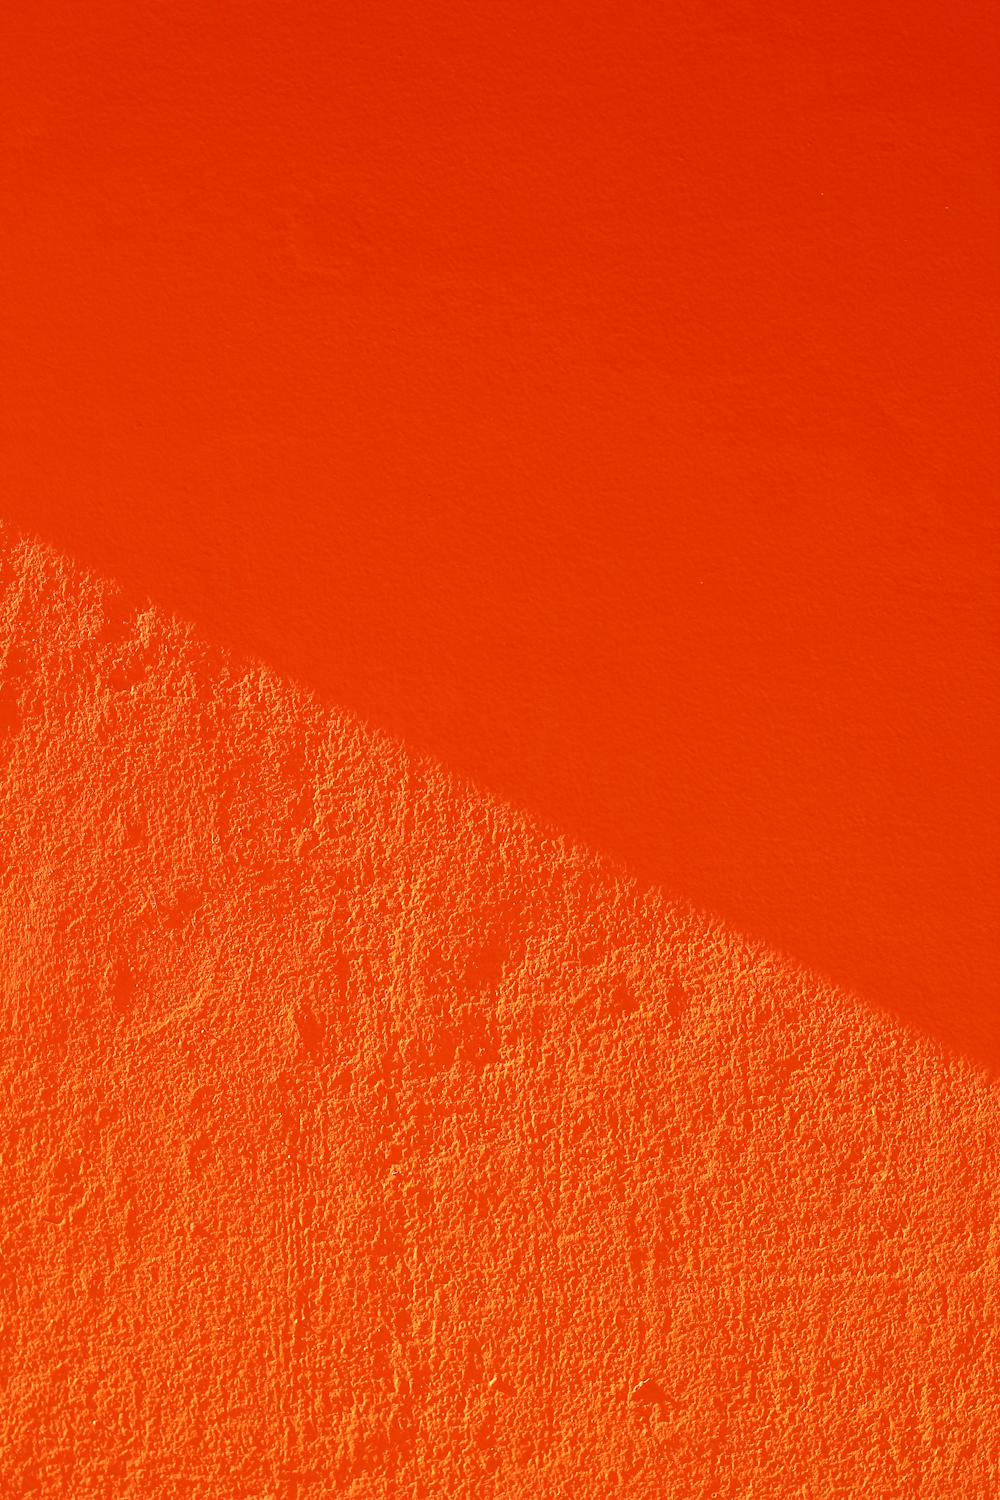 una pared naranja con una sombra